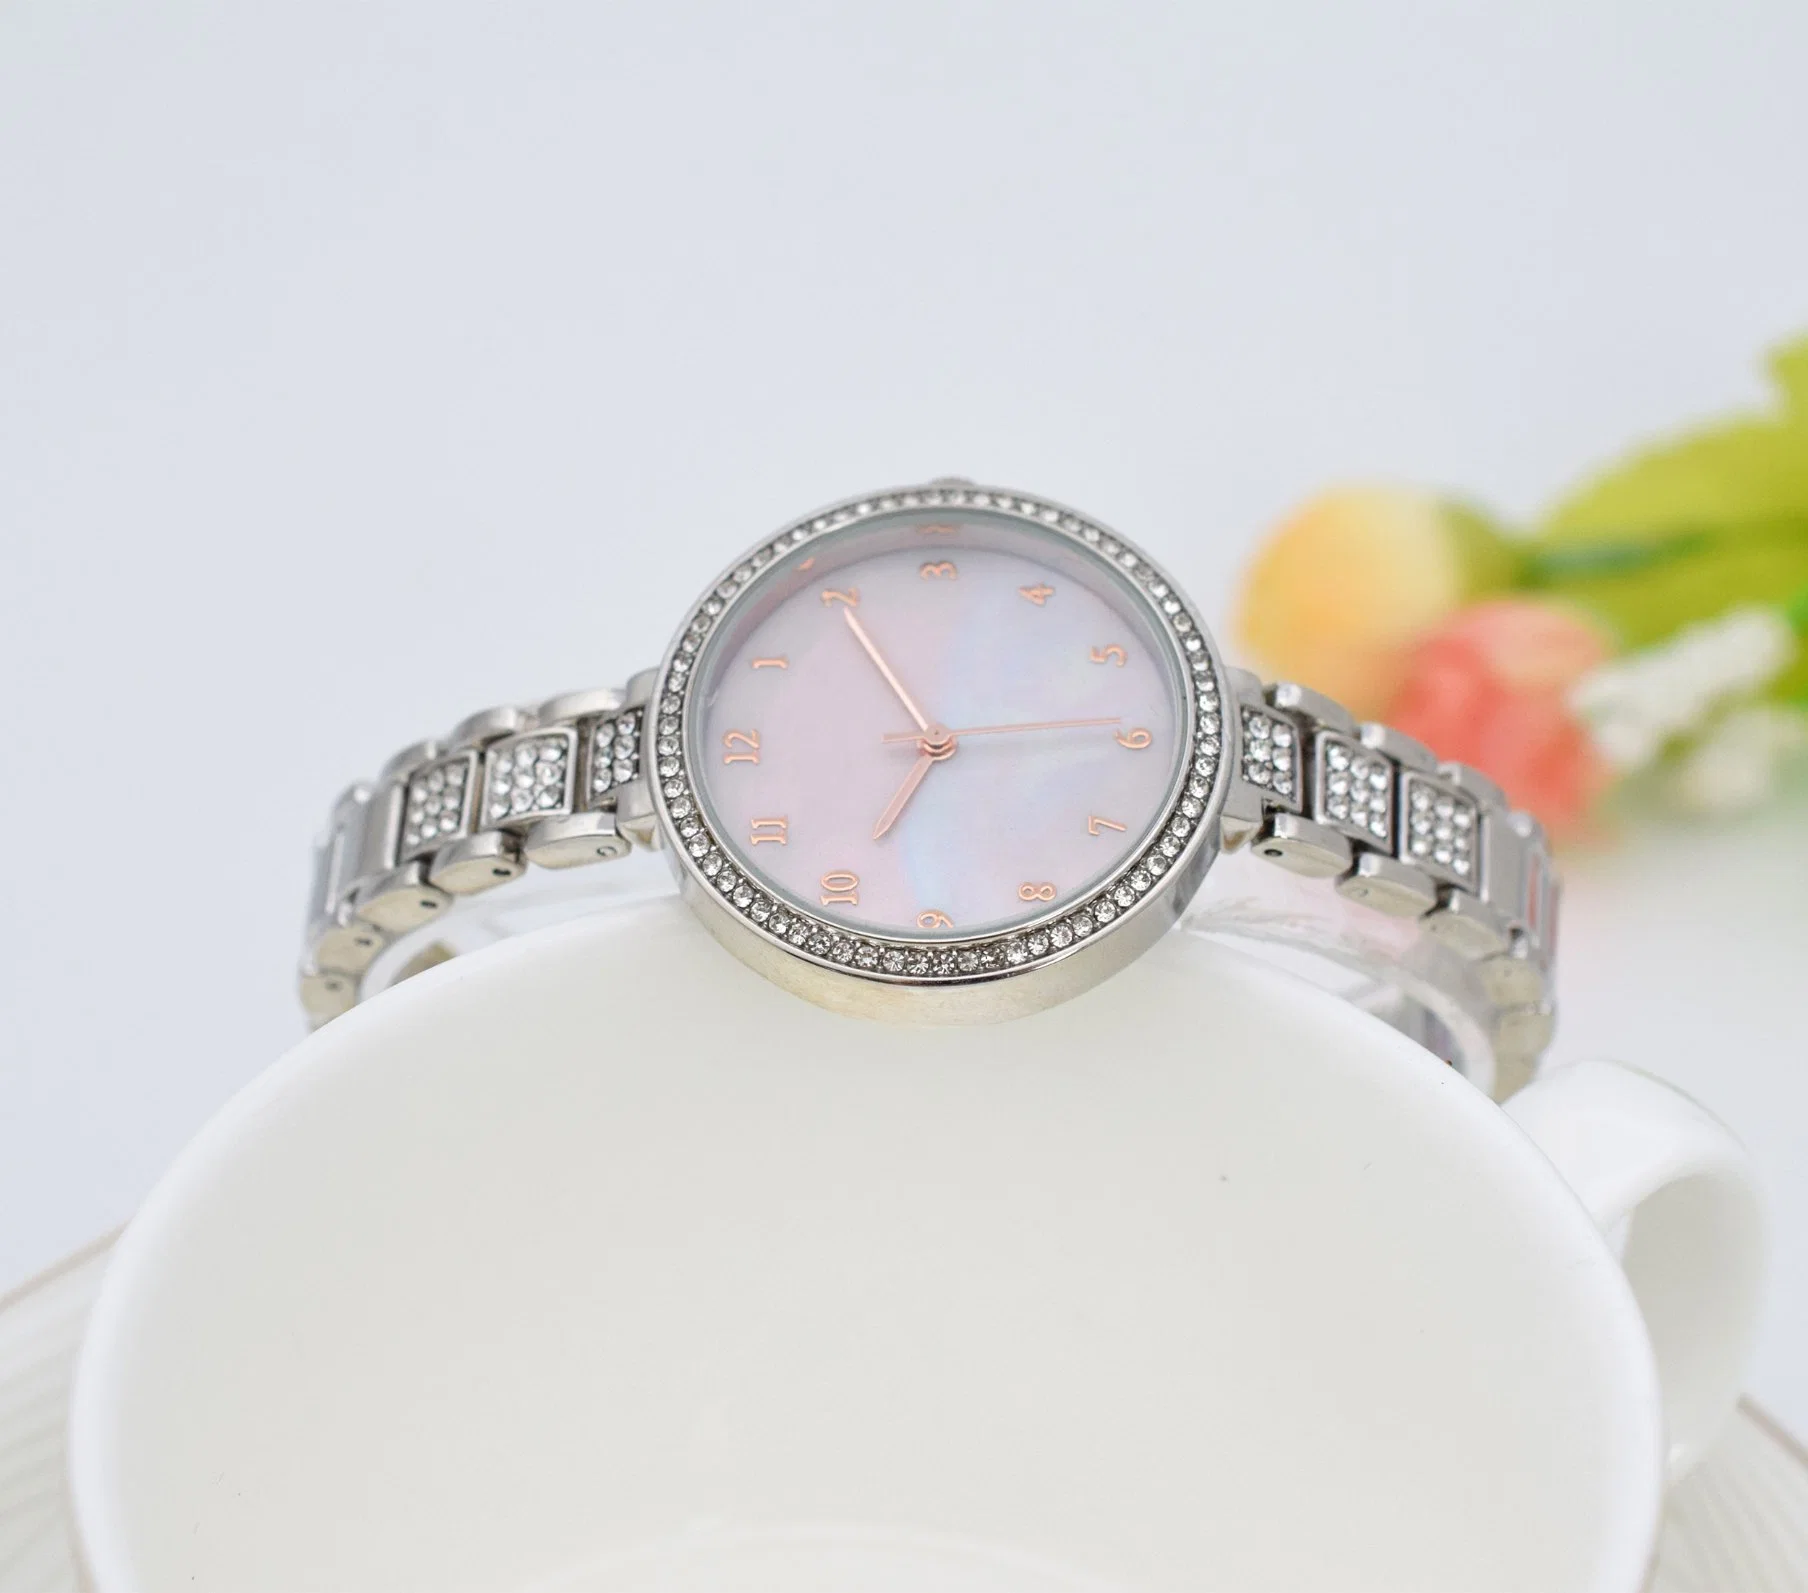 Custom Watch Gift Watch Quartz Watch Fashion Watch Lady Promotional Watch Alloy Cheap Watch